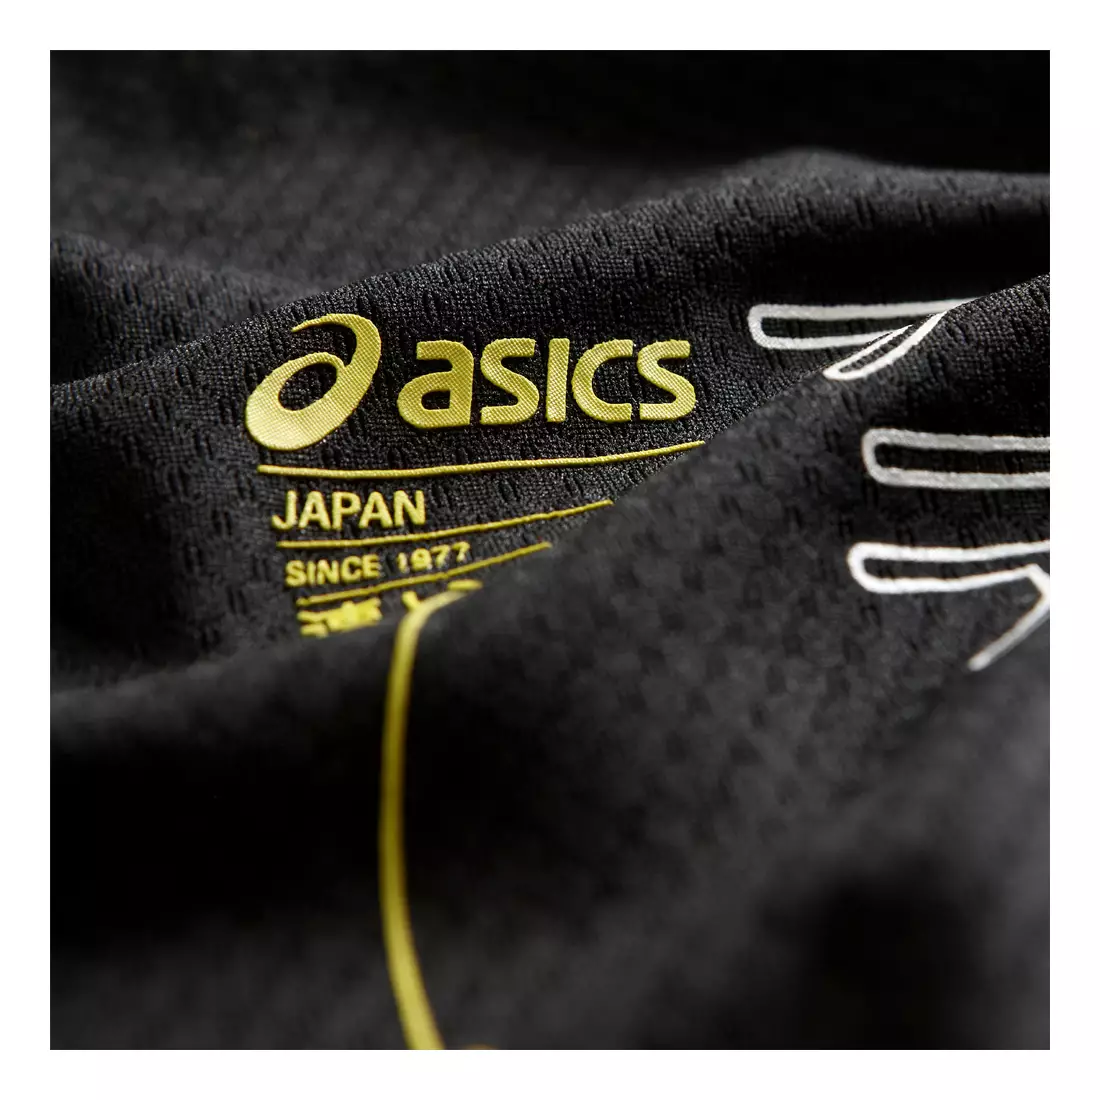 ASICS 110506-0904 GRAPHIC TOP - men's running T-shirt, color: Black